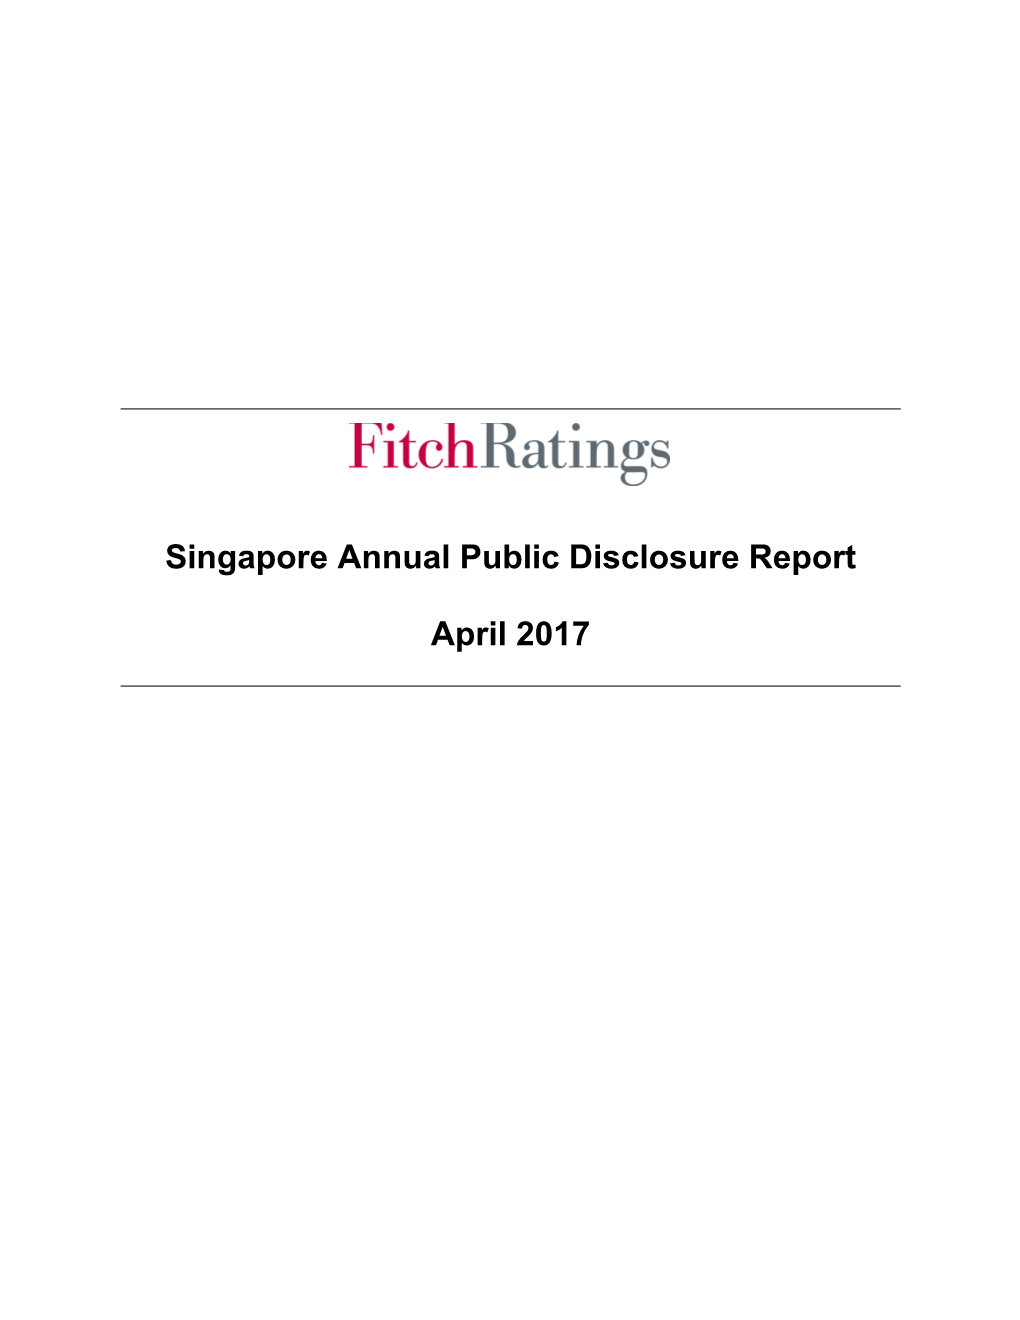 Singapore Annual Public Disclosure Report April 2017